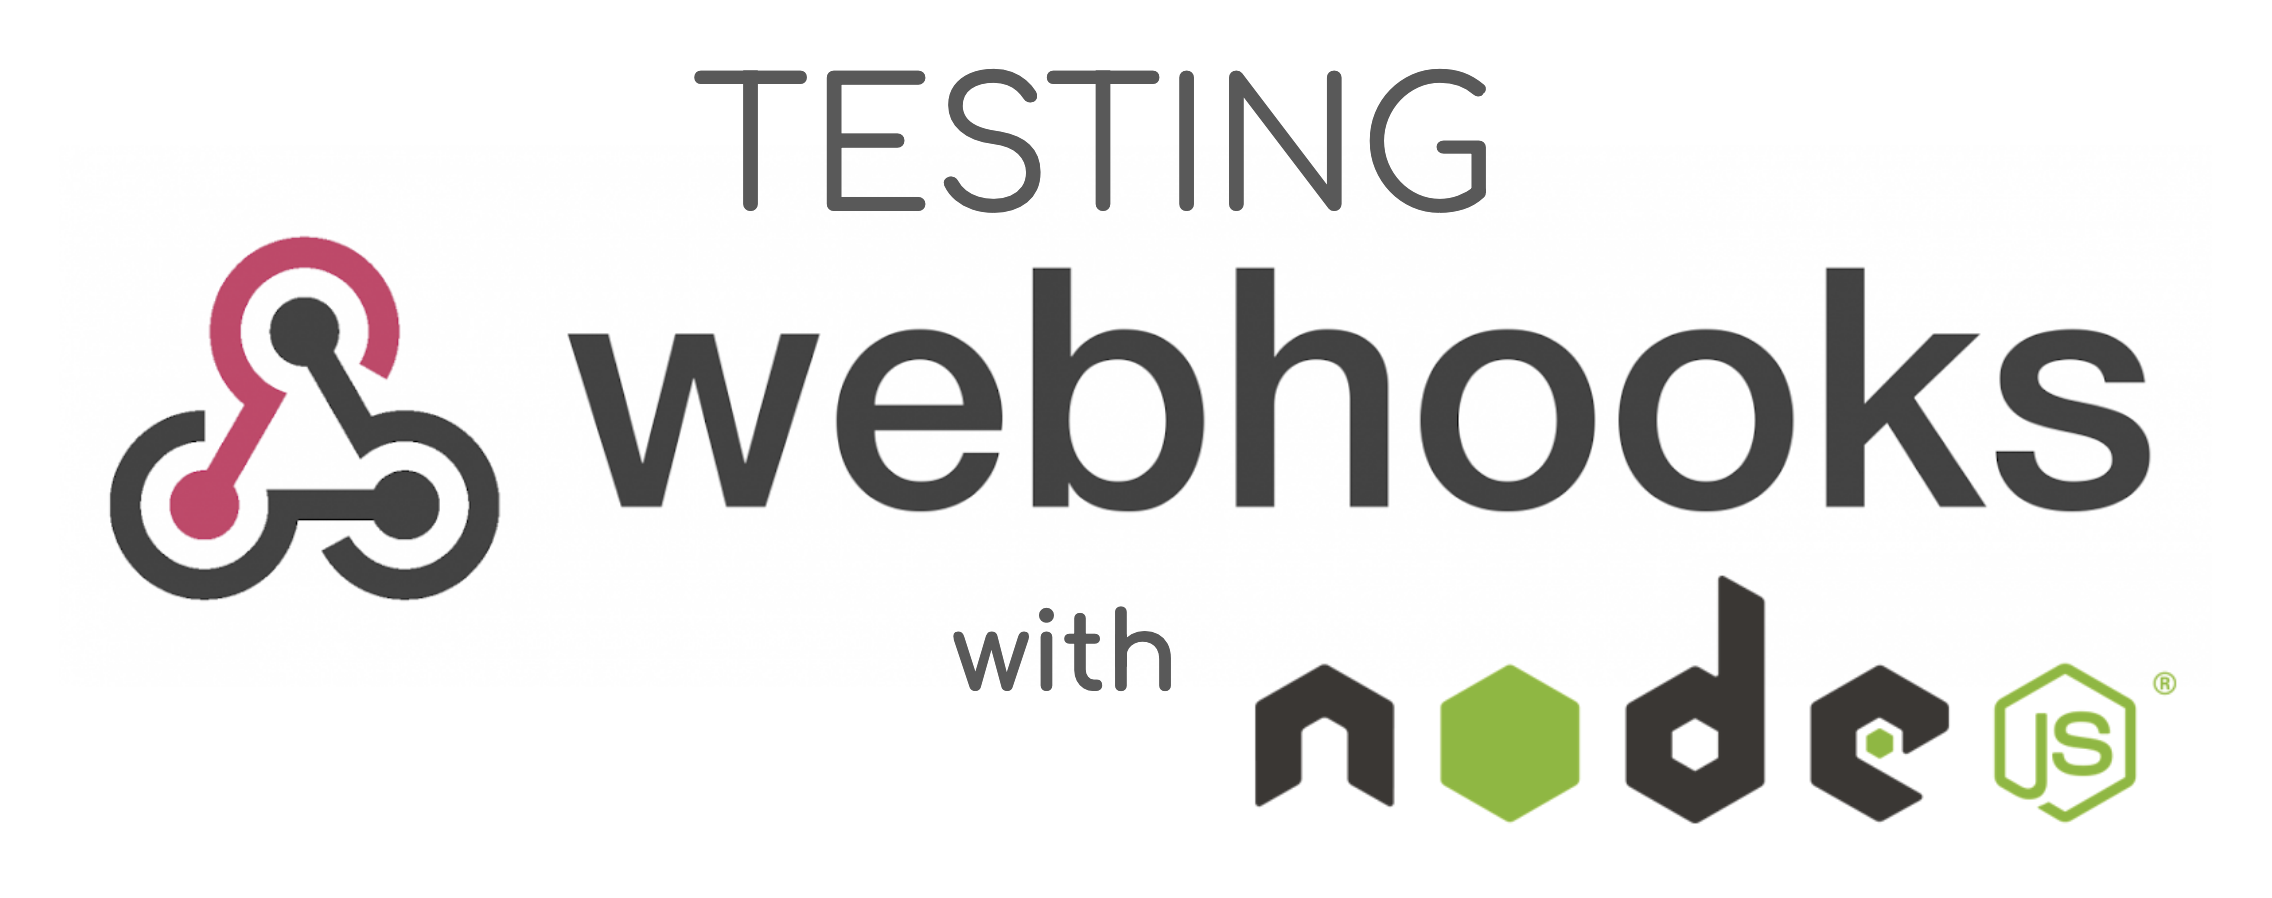 testing webhooks with nodejs